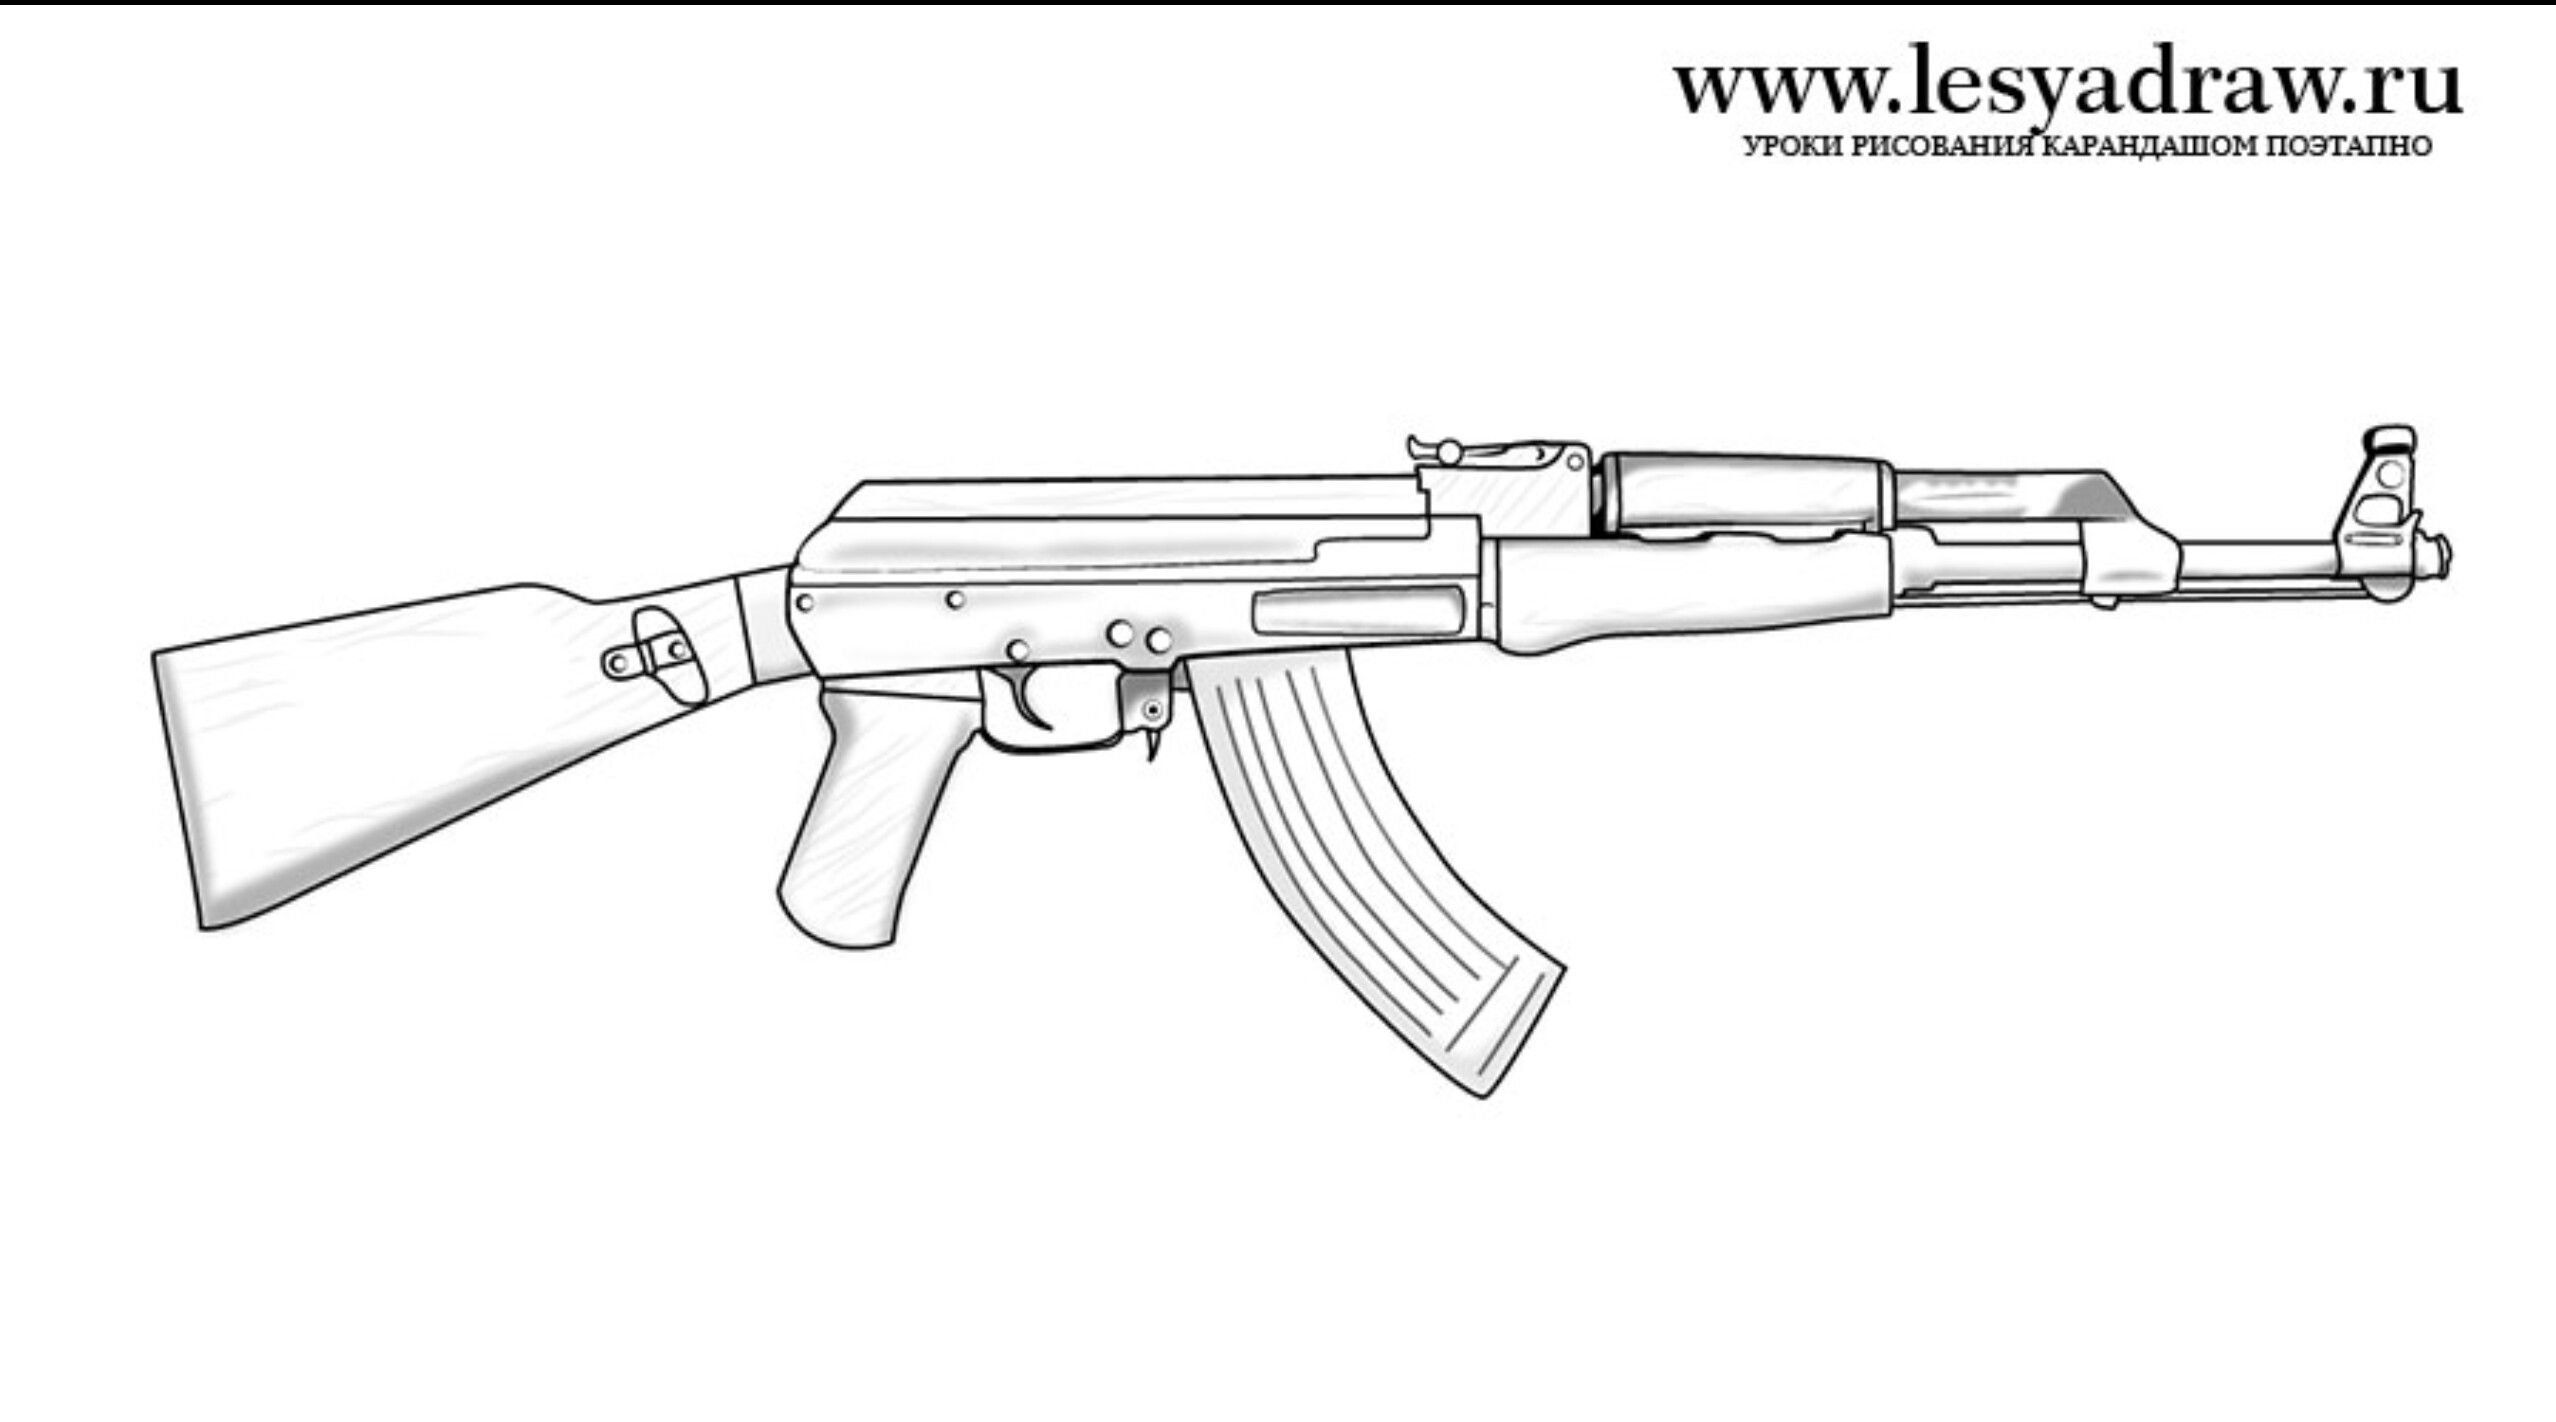 Автомат Калашникова АК-47 рисунок карандашом